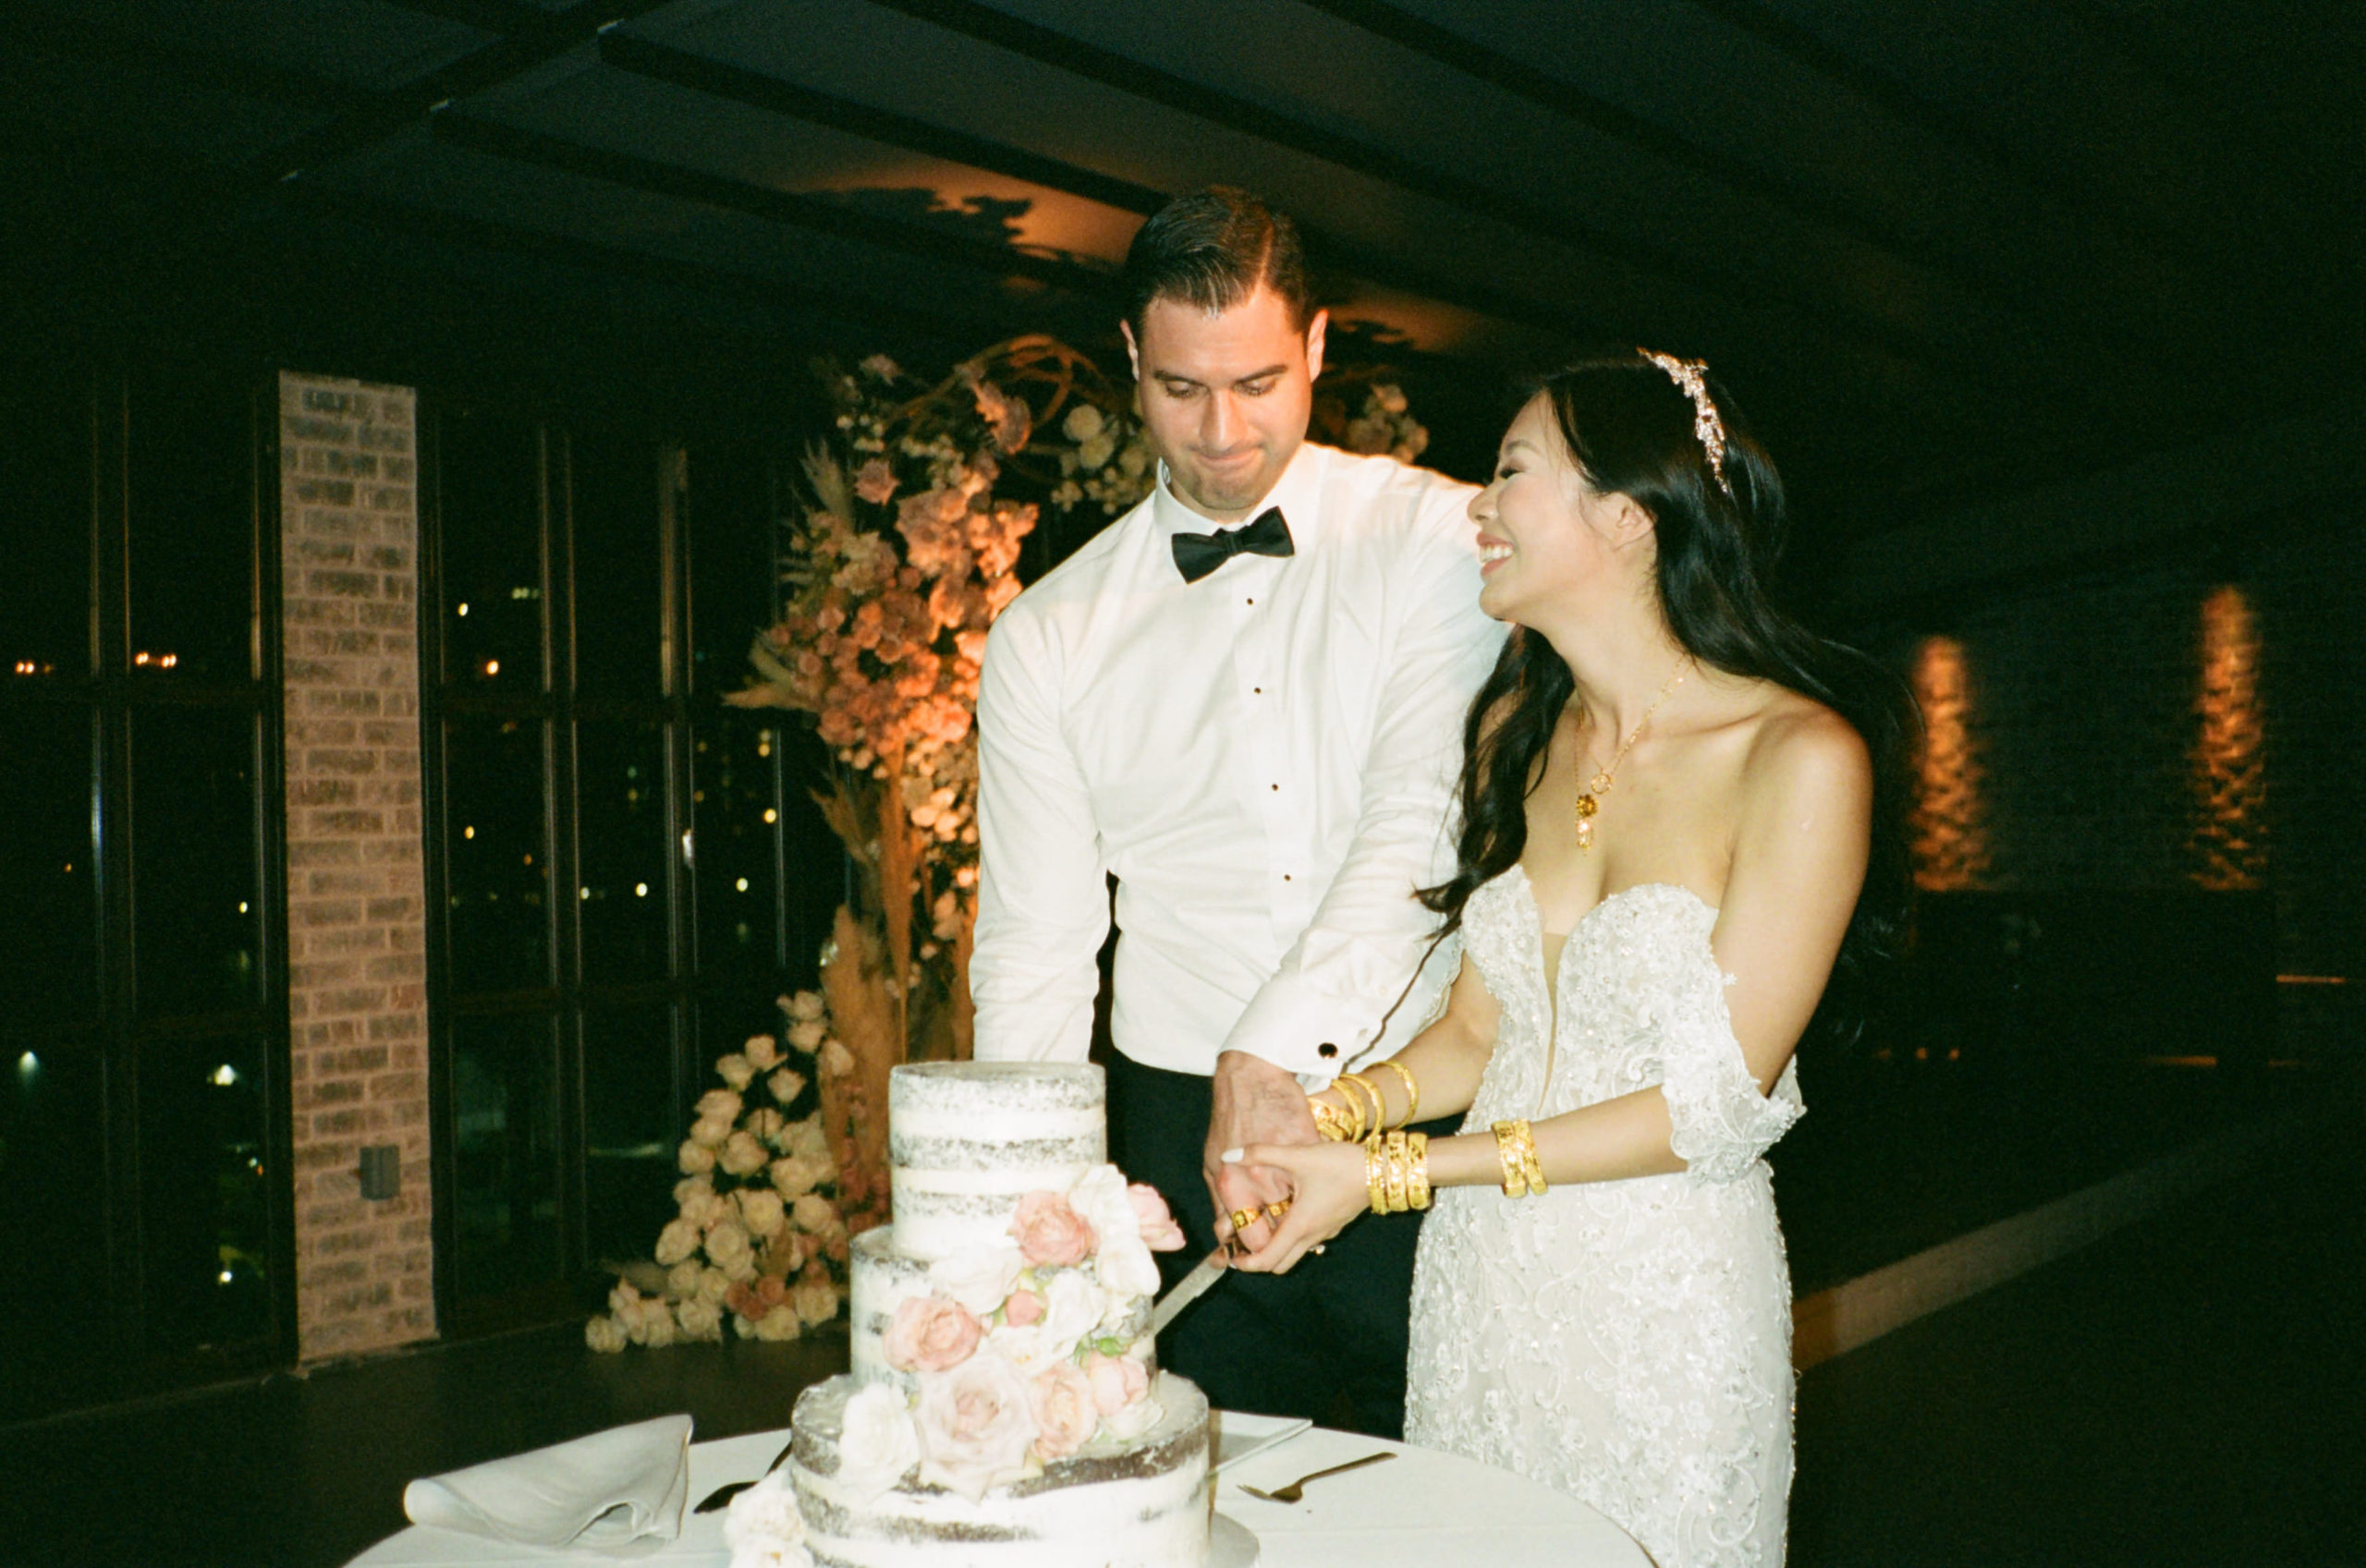 Cake-cutting ceremony. Film wedding photography image by Jenny Fu Studio